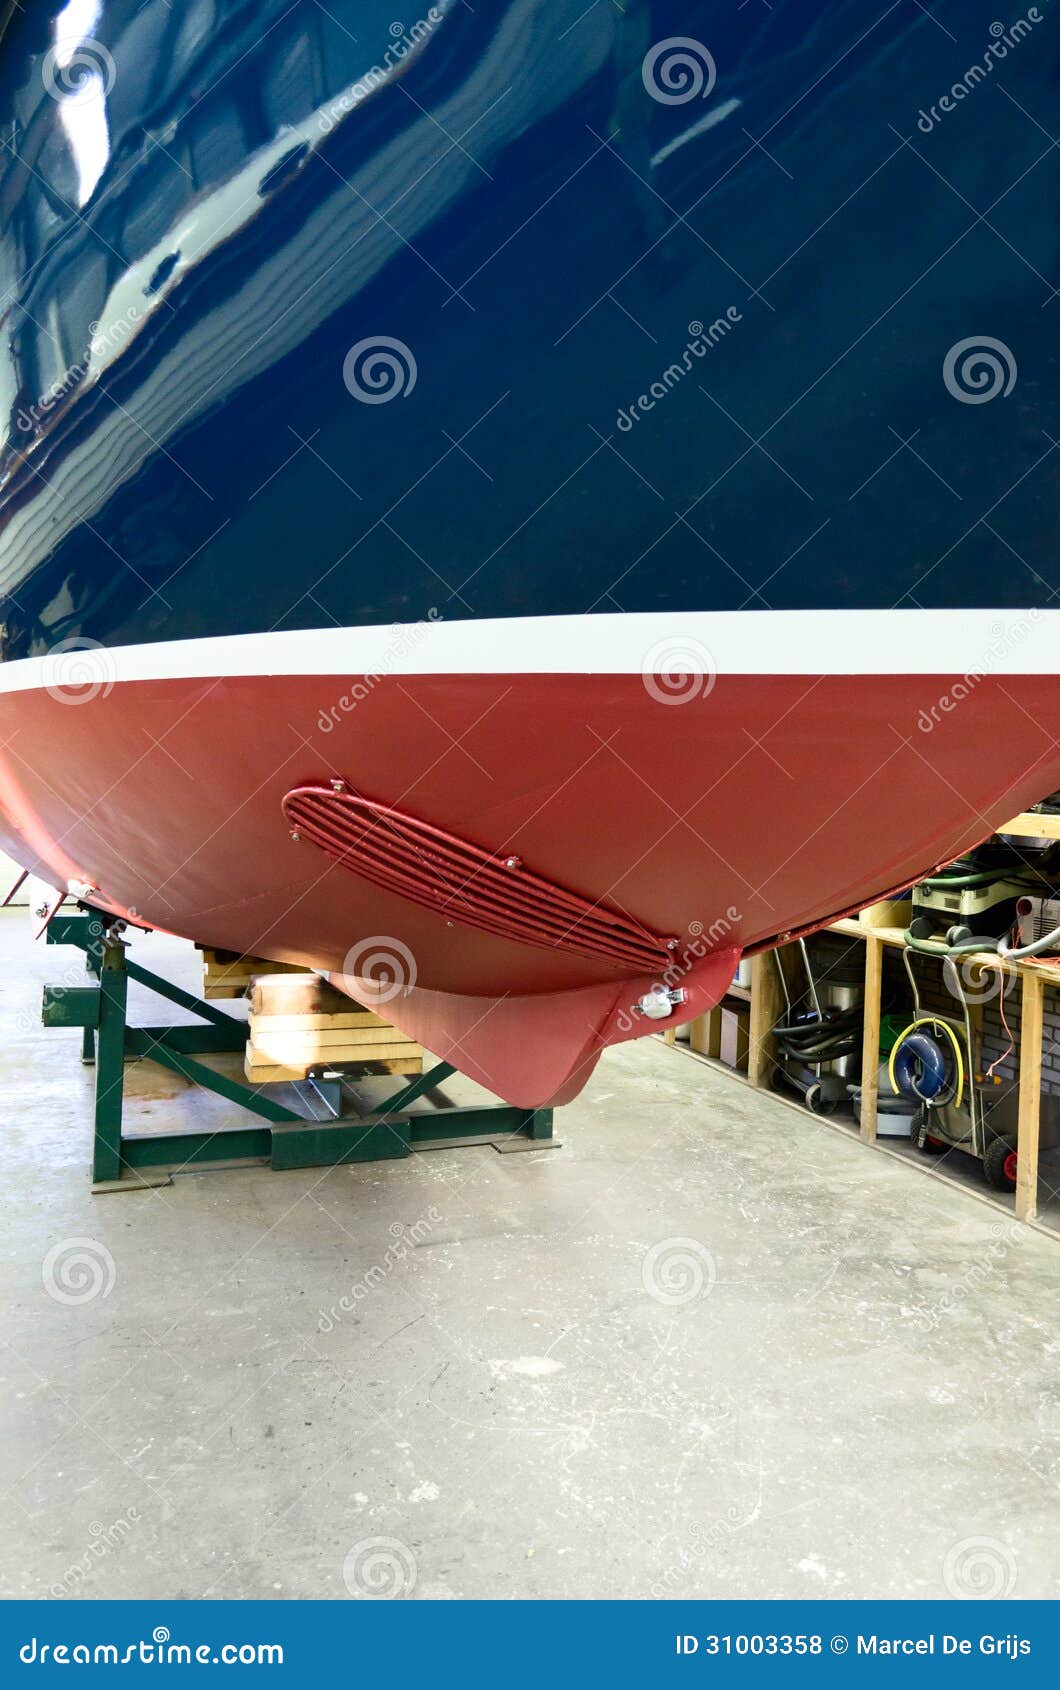 hull of a ship